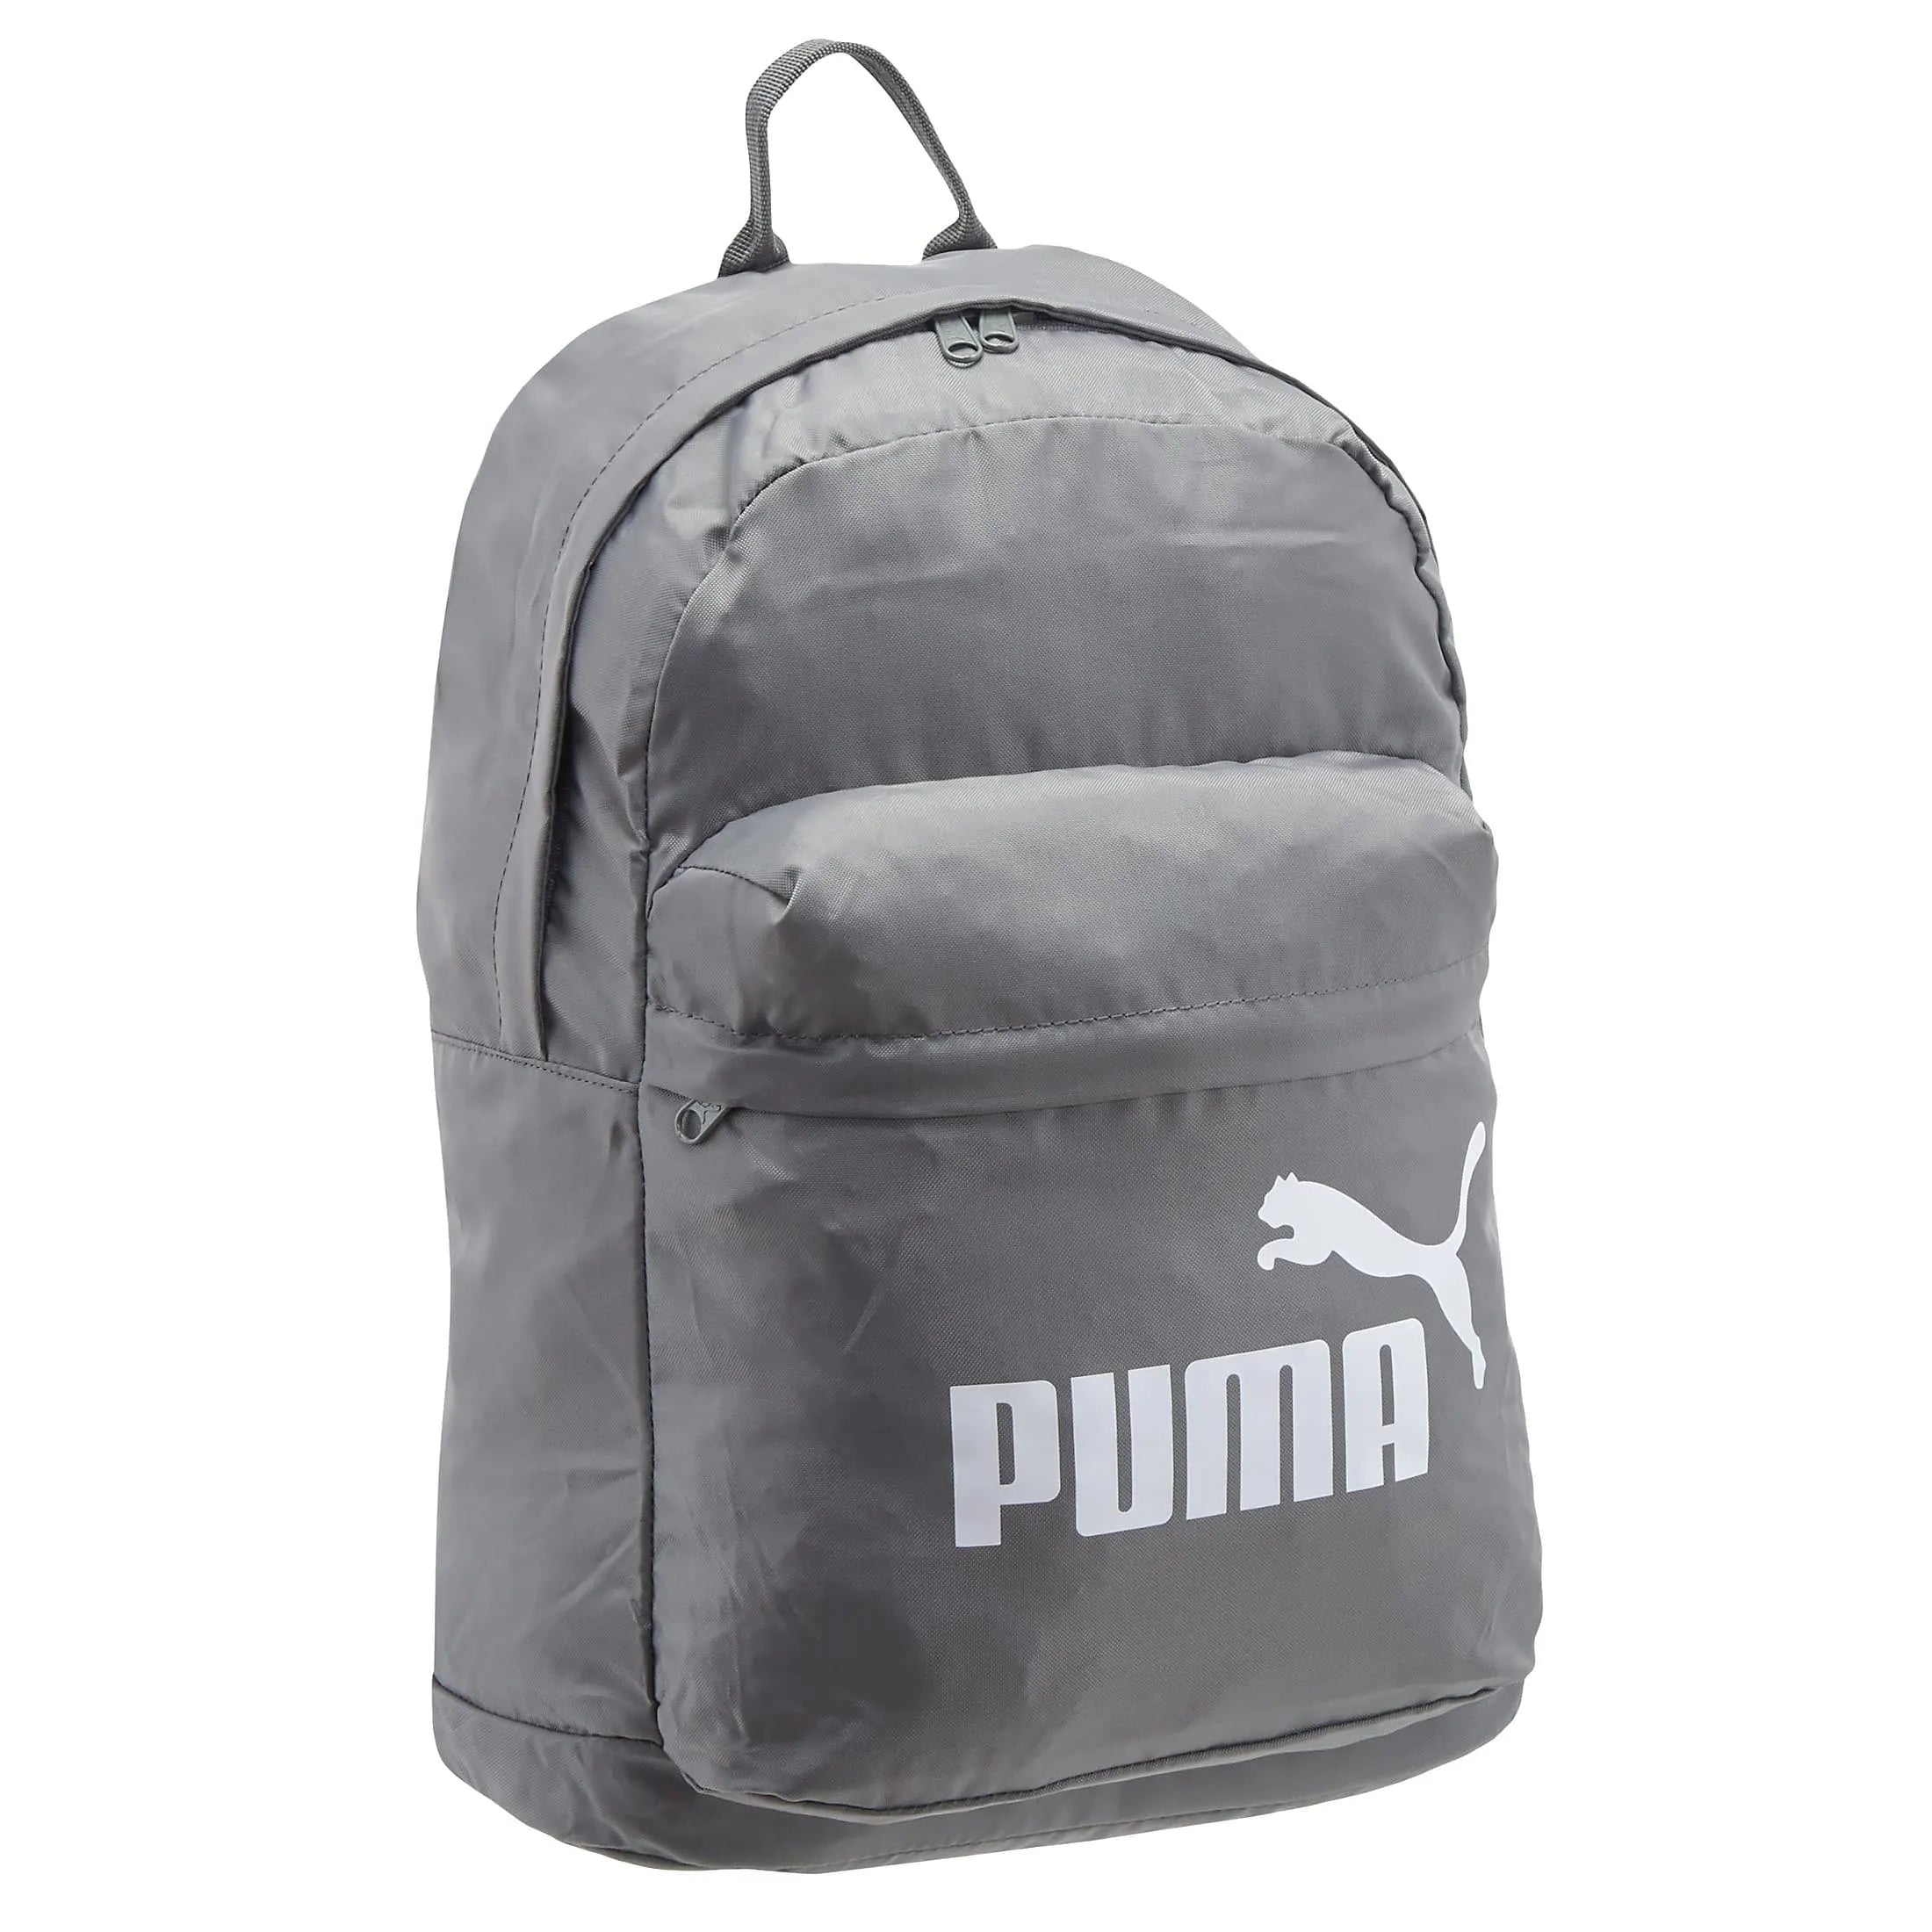 Puma Sports Classic Rucksack 43 cm - charcoal gray